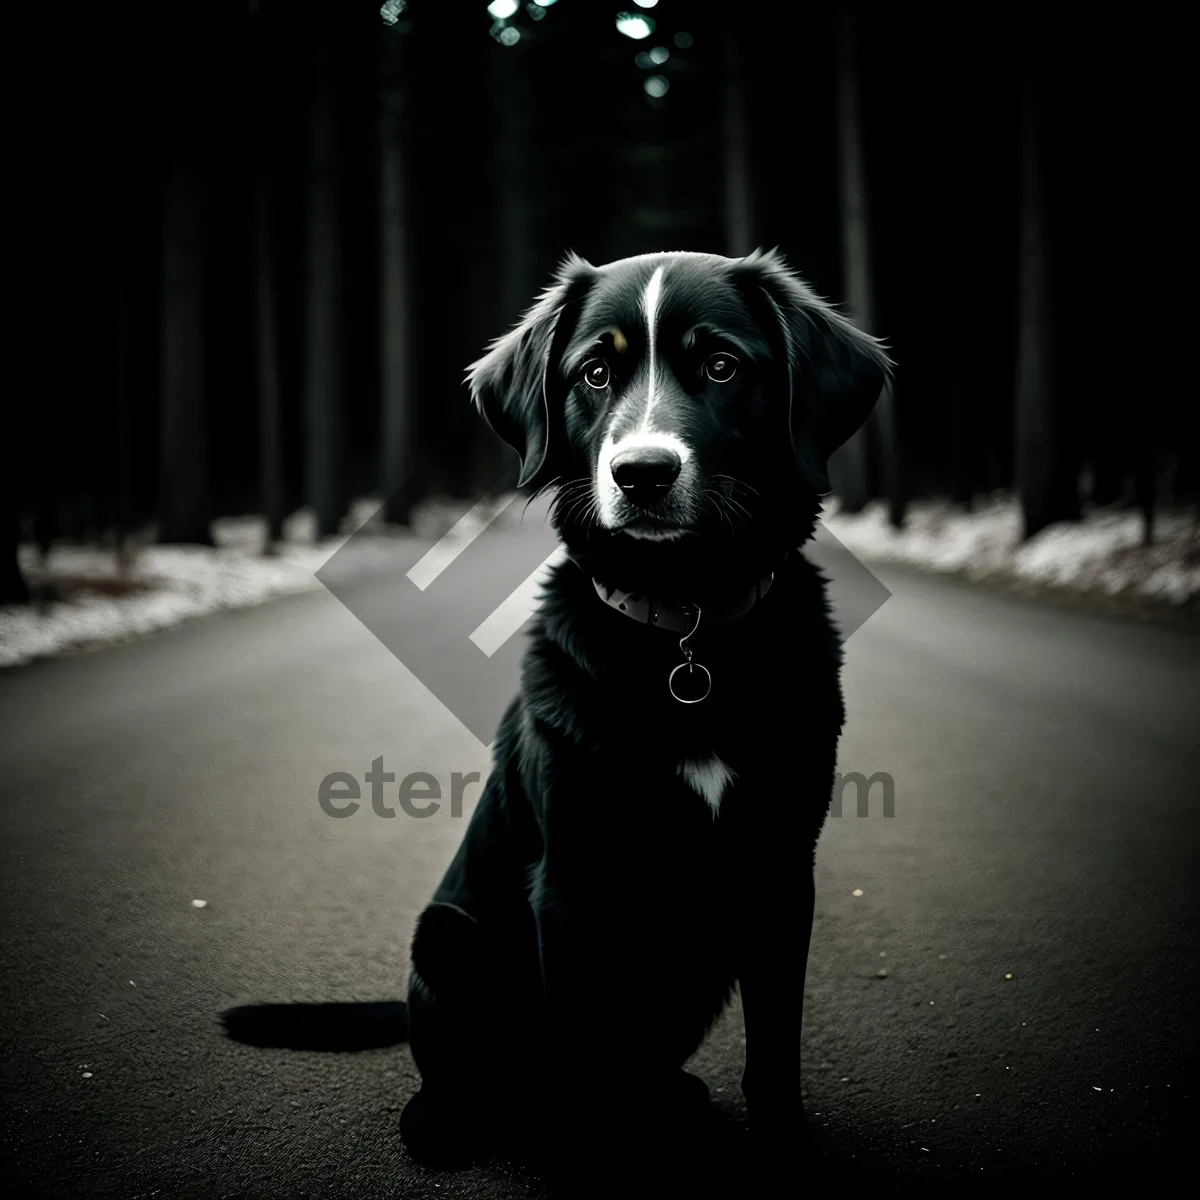 Picture of Black Retriever Puppy on Leash - Adorable Canine Companion